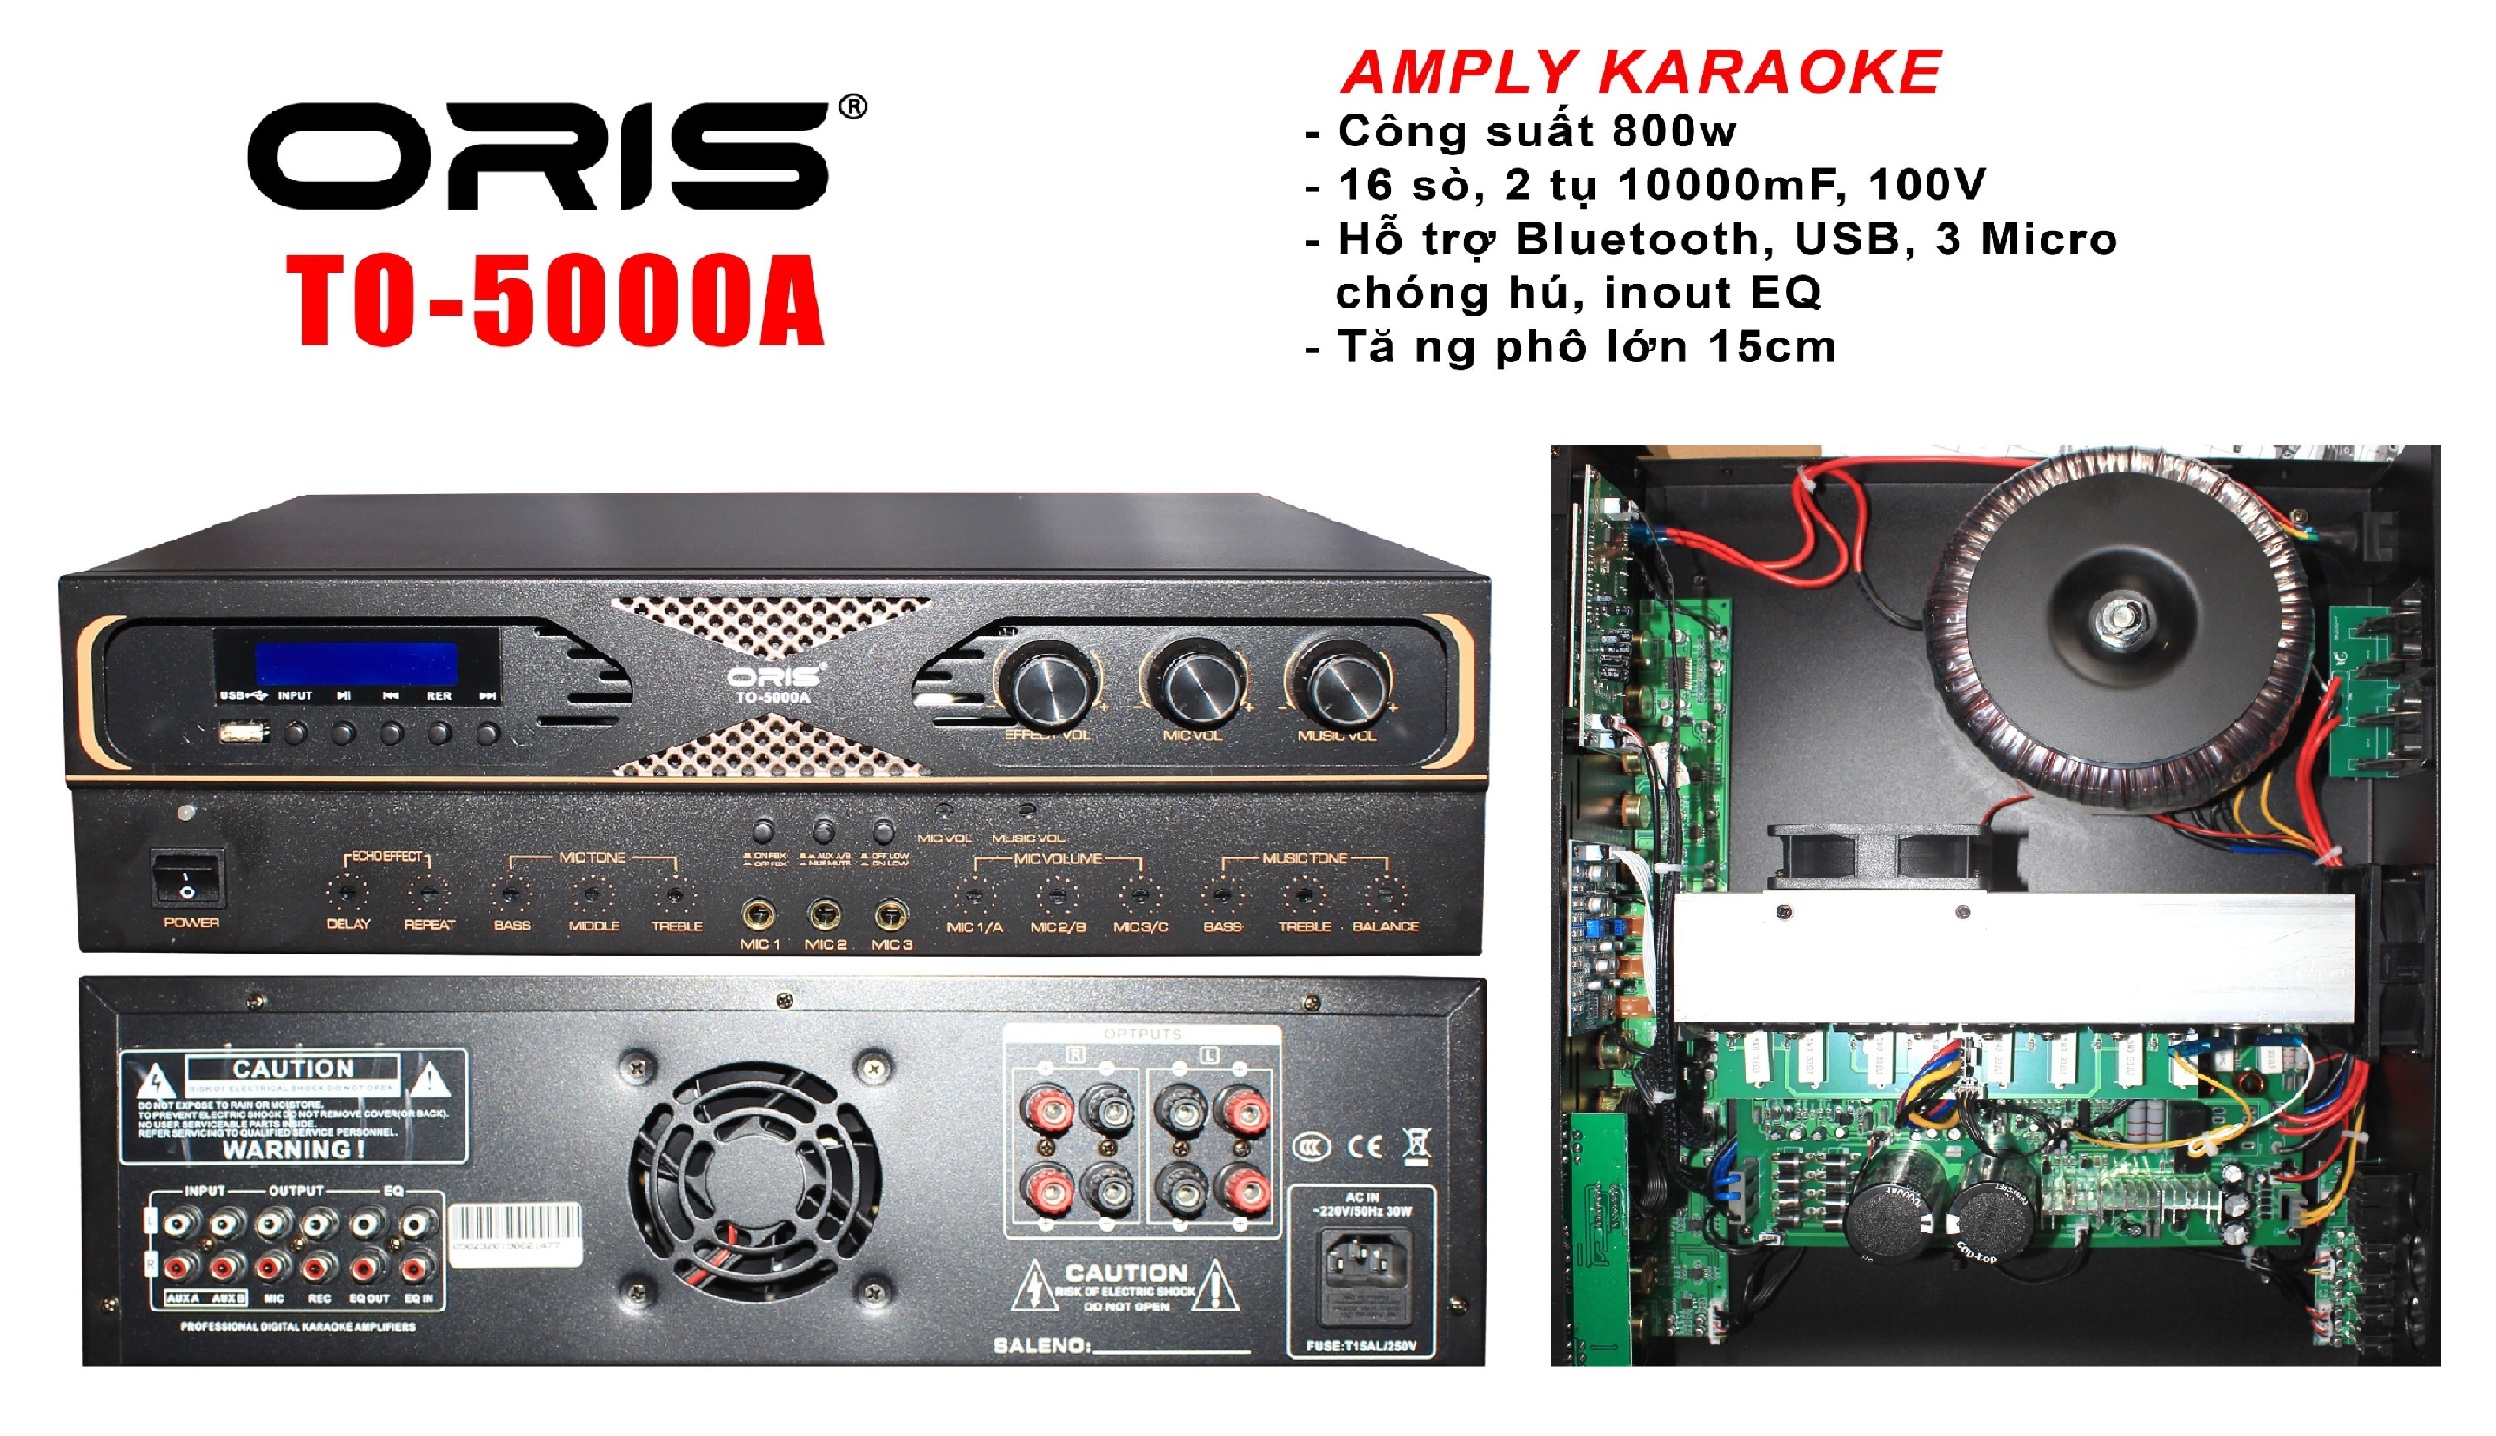 Amply karaoke kết hợp vang số Oris TO-5000A